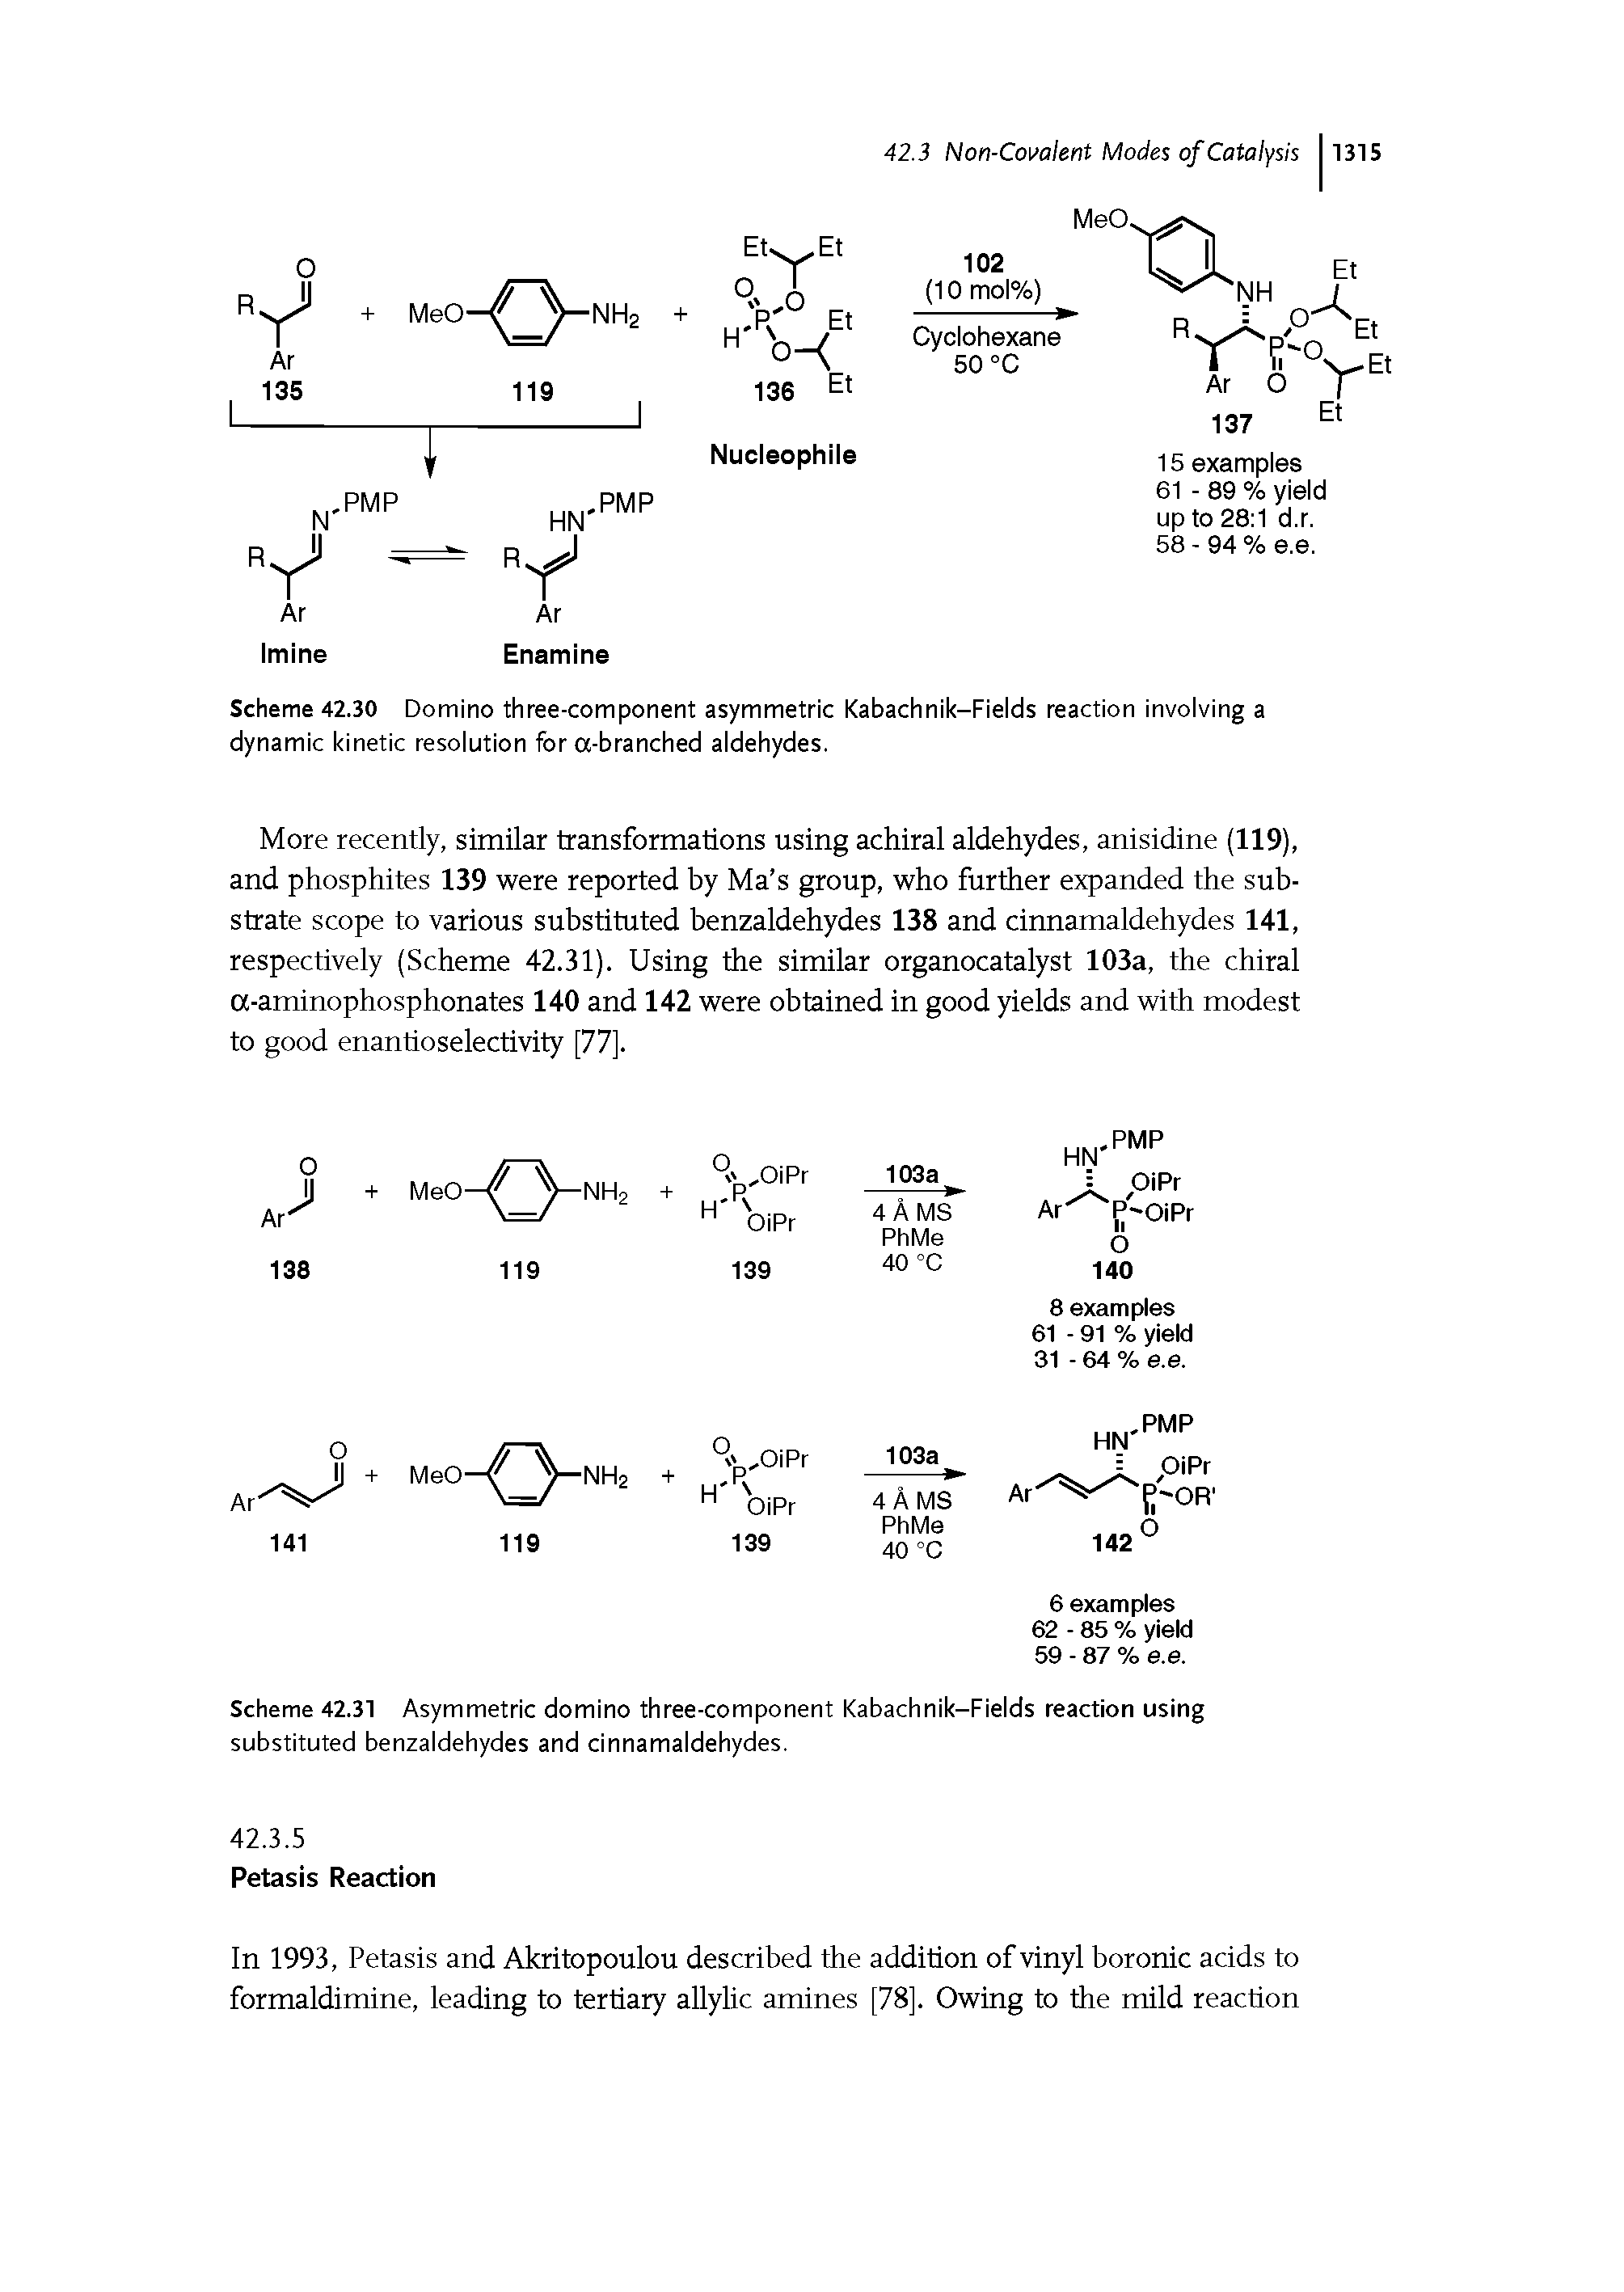 Scheme 42.31 Asymmetric domino three-component Kabachnik-Fields reaction using substituted benzaldehydes and cinnamaldehydes.